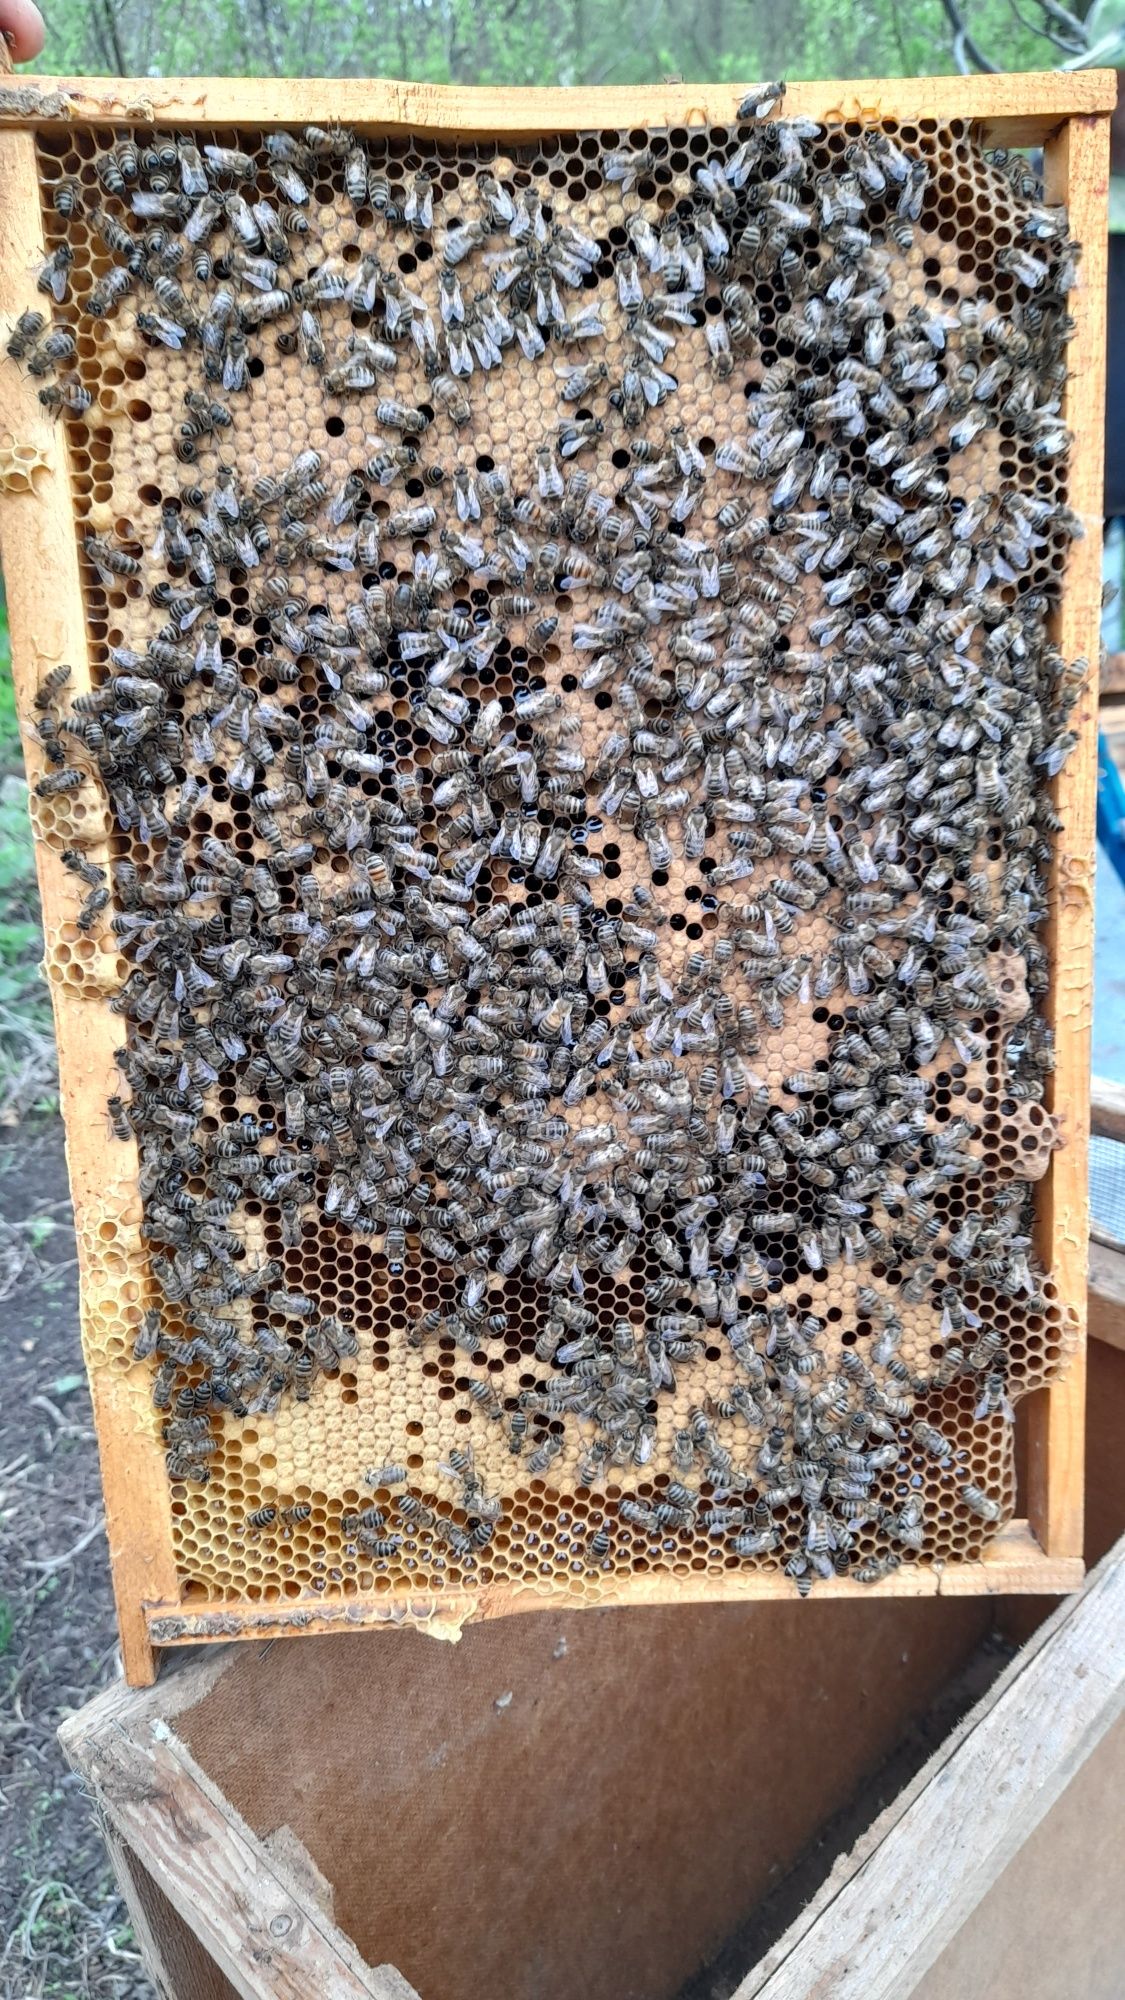 Пчелопакеты, пчелосемьи, пчеломатки.